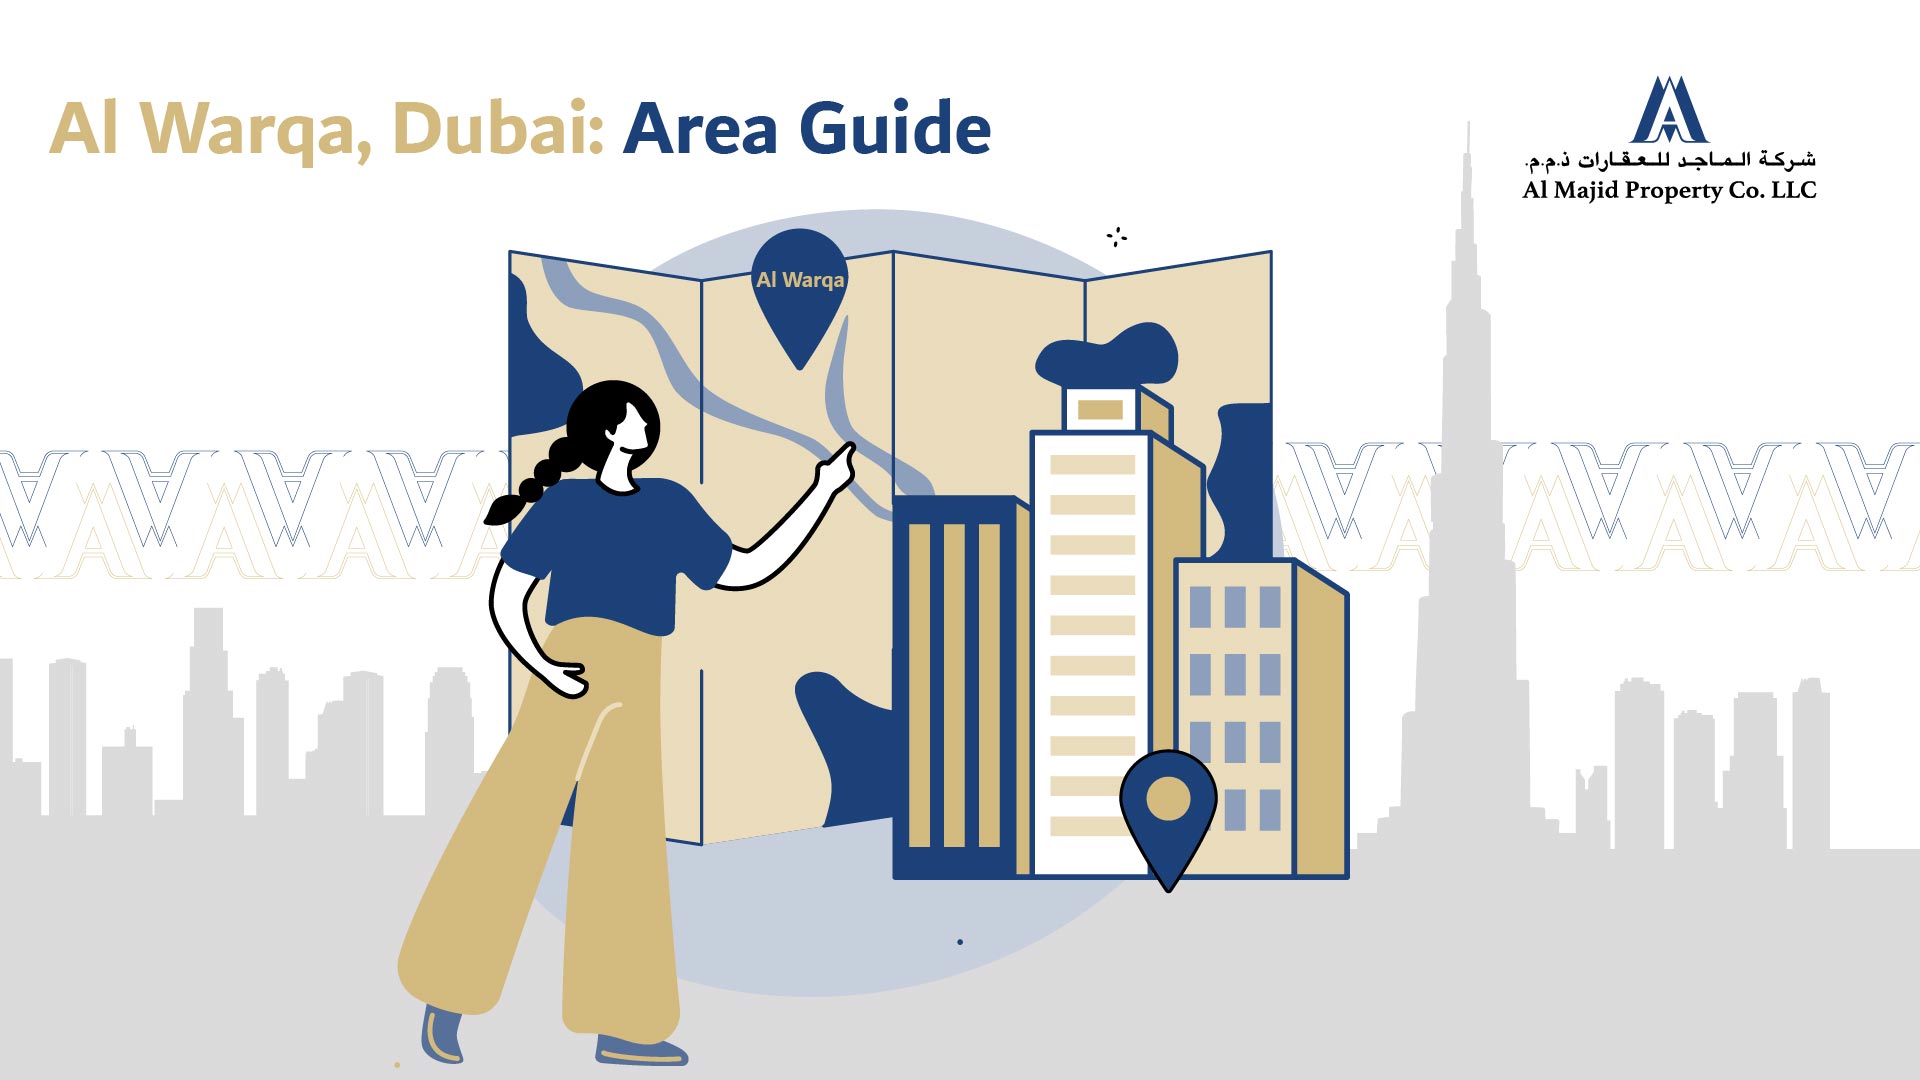 Al Warqa, Dubai: Area Guide